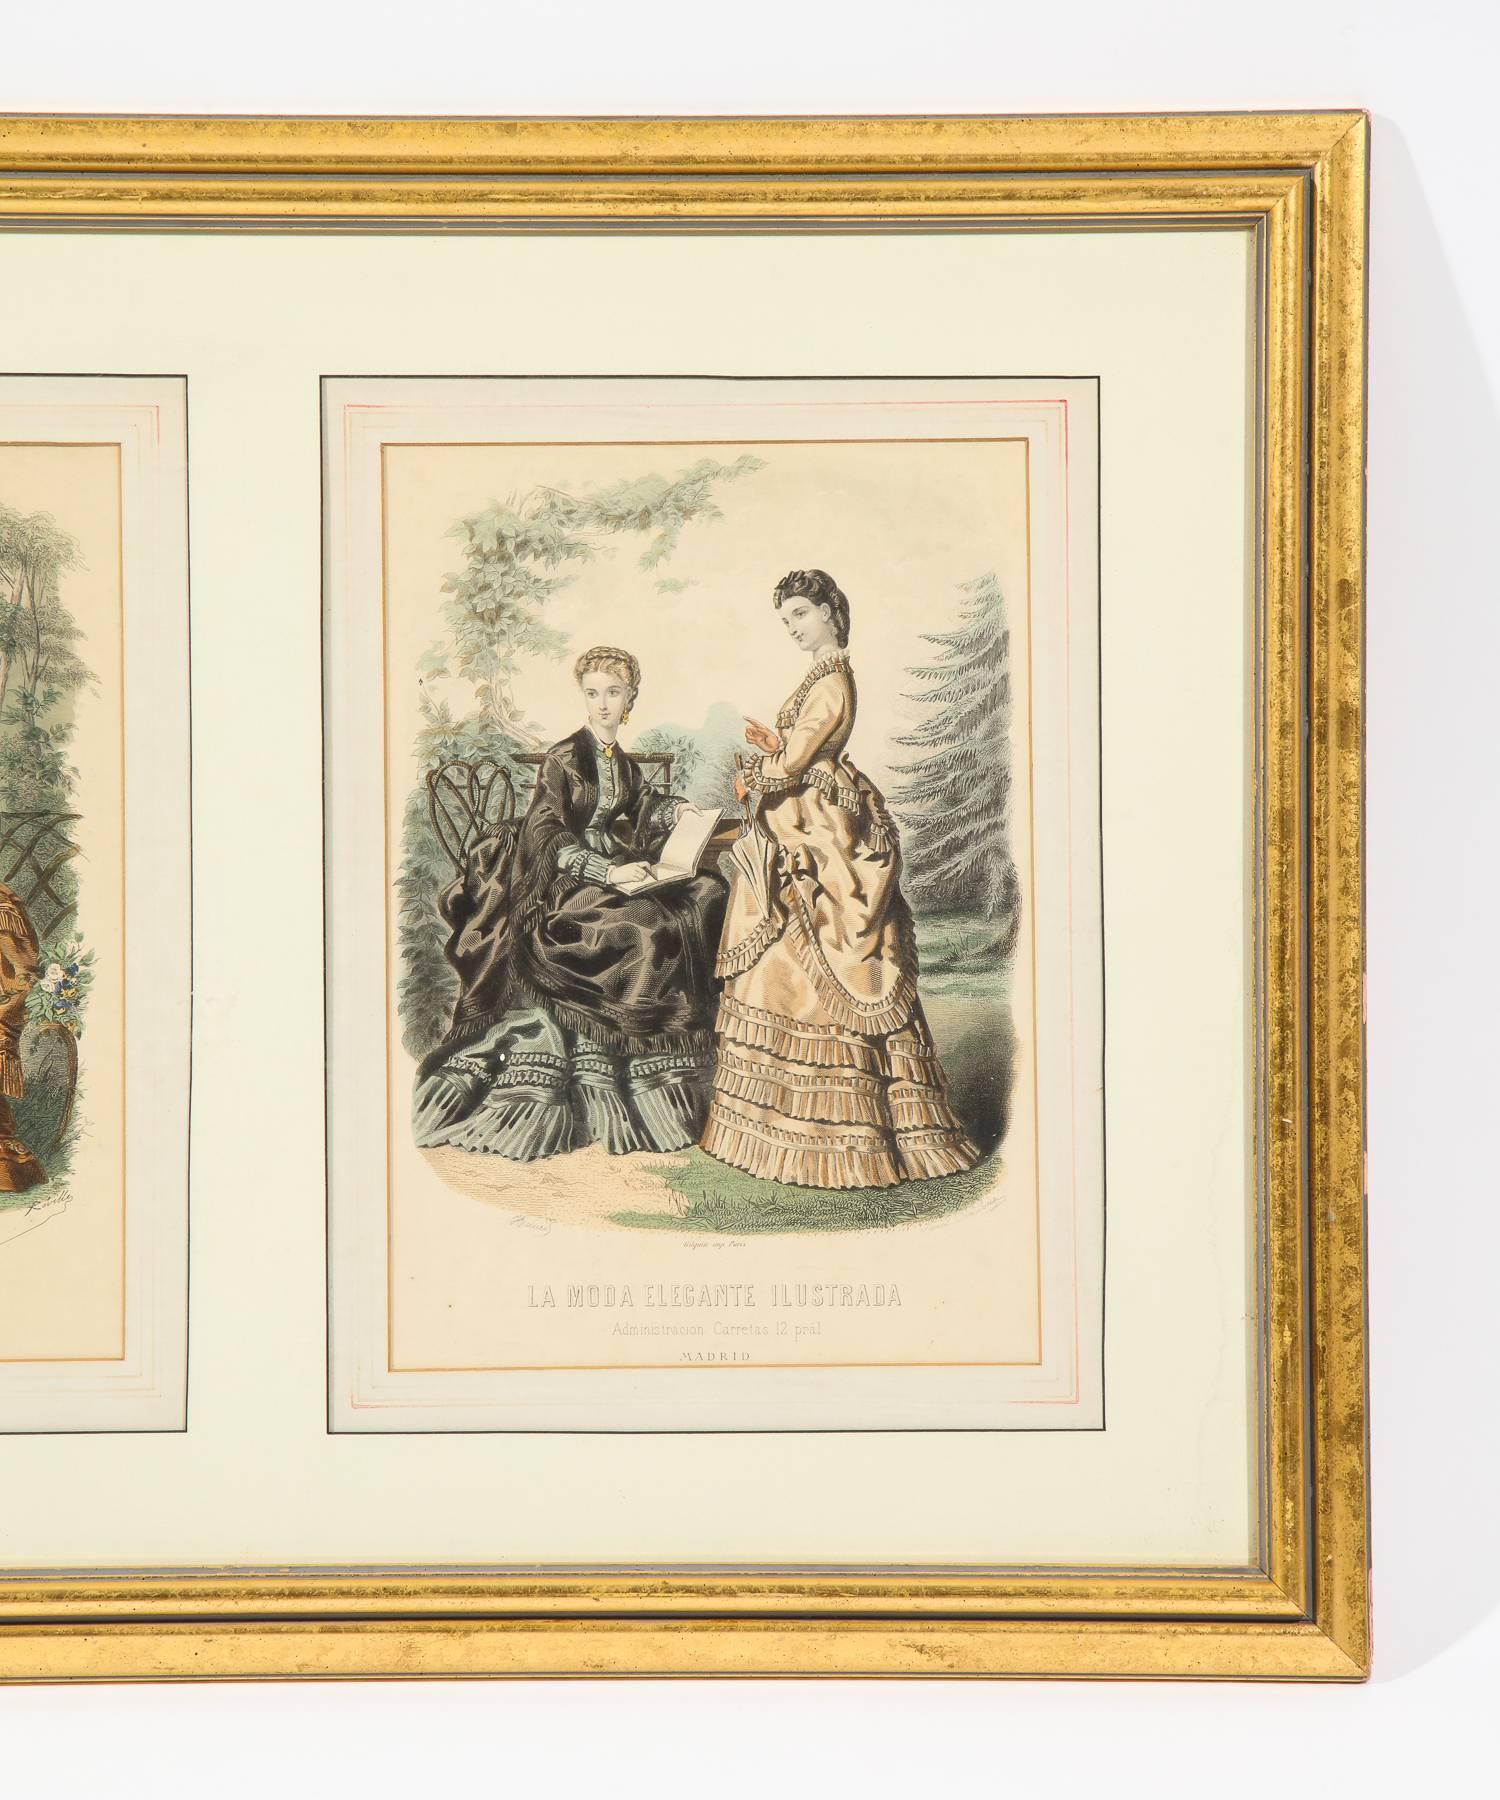 19th century prints